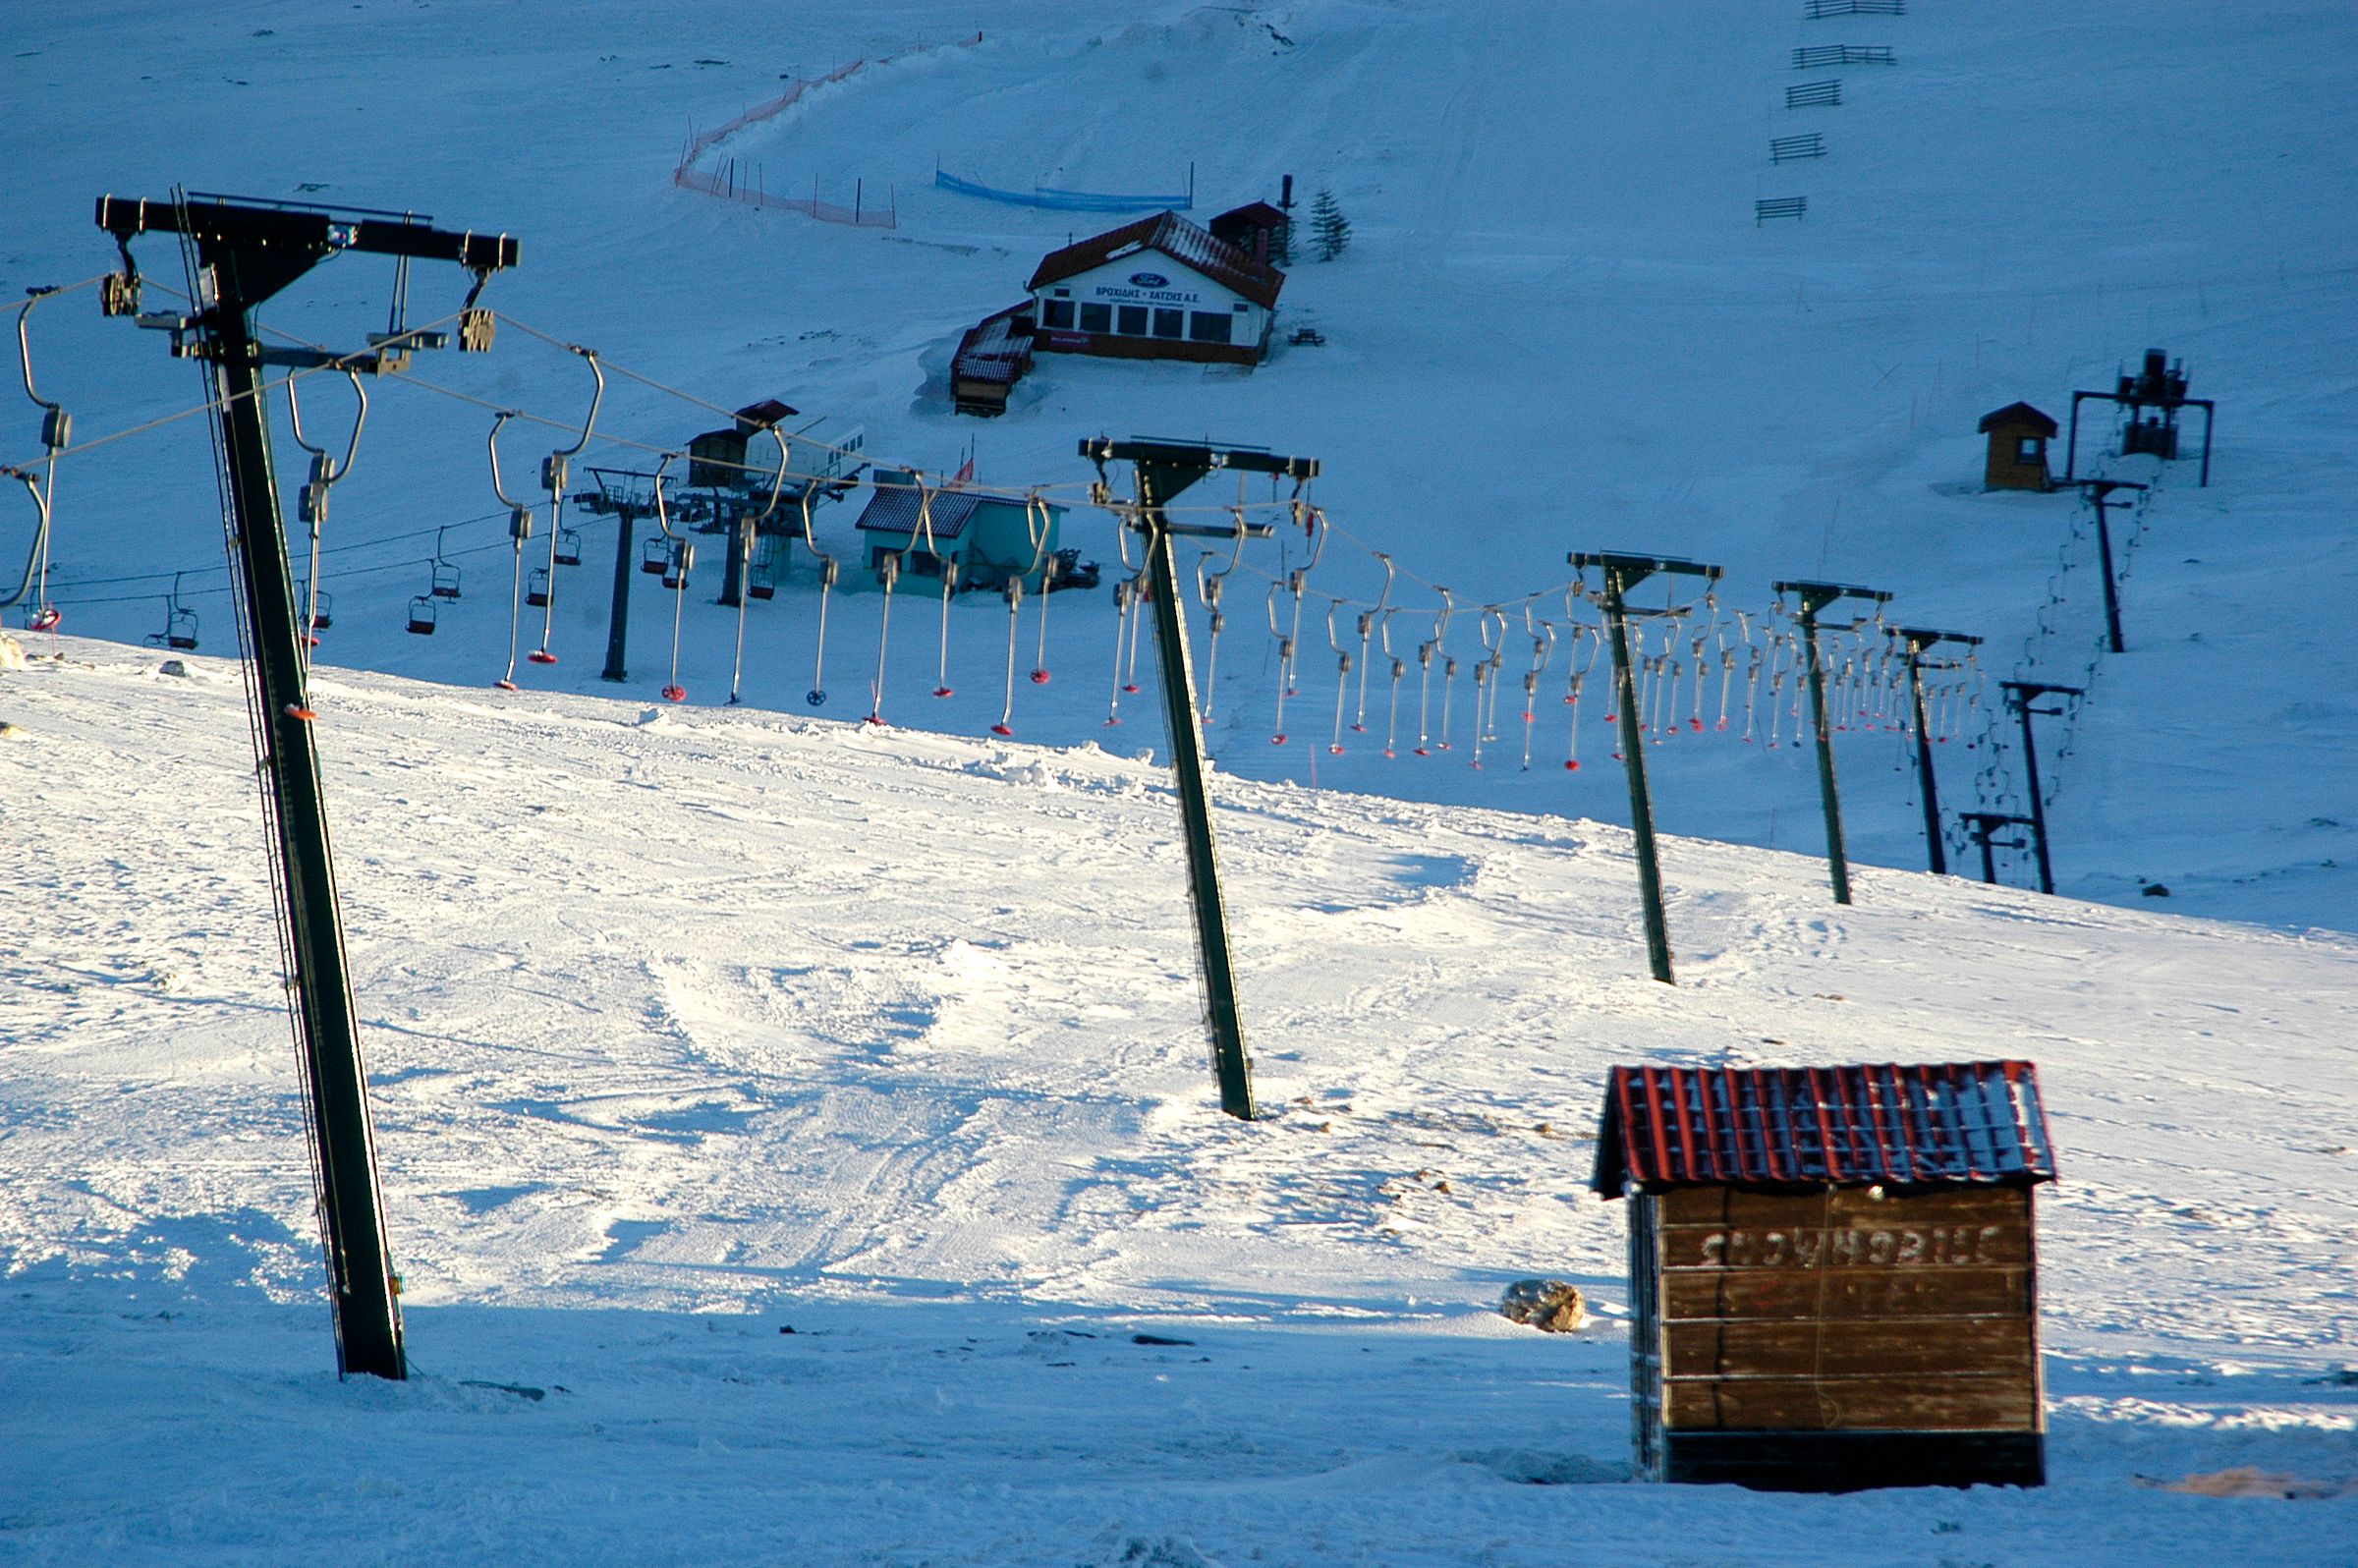 Kaimaktsalan Ski Center 